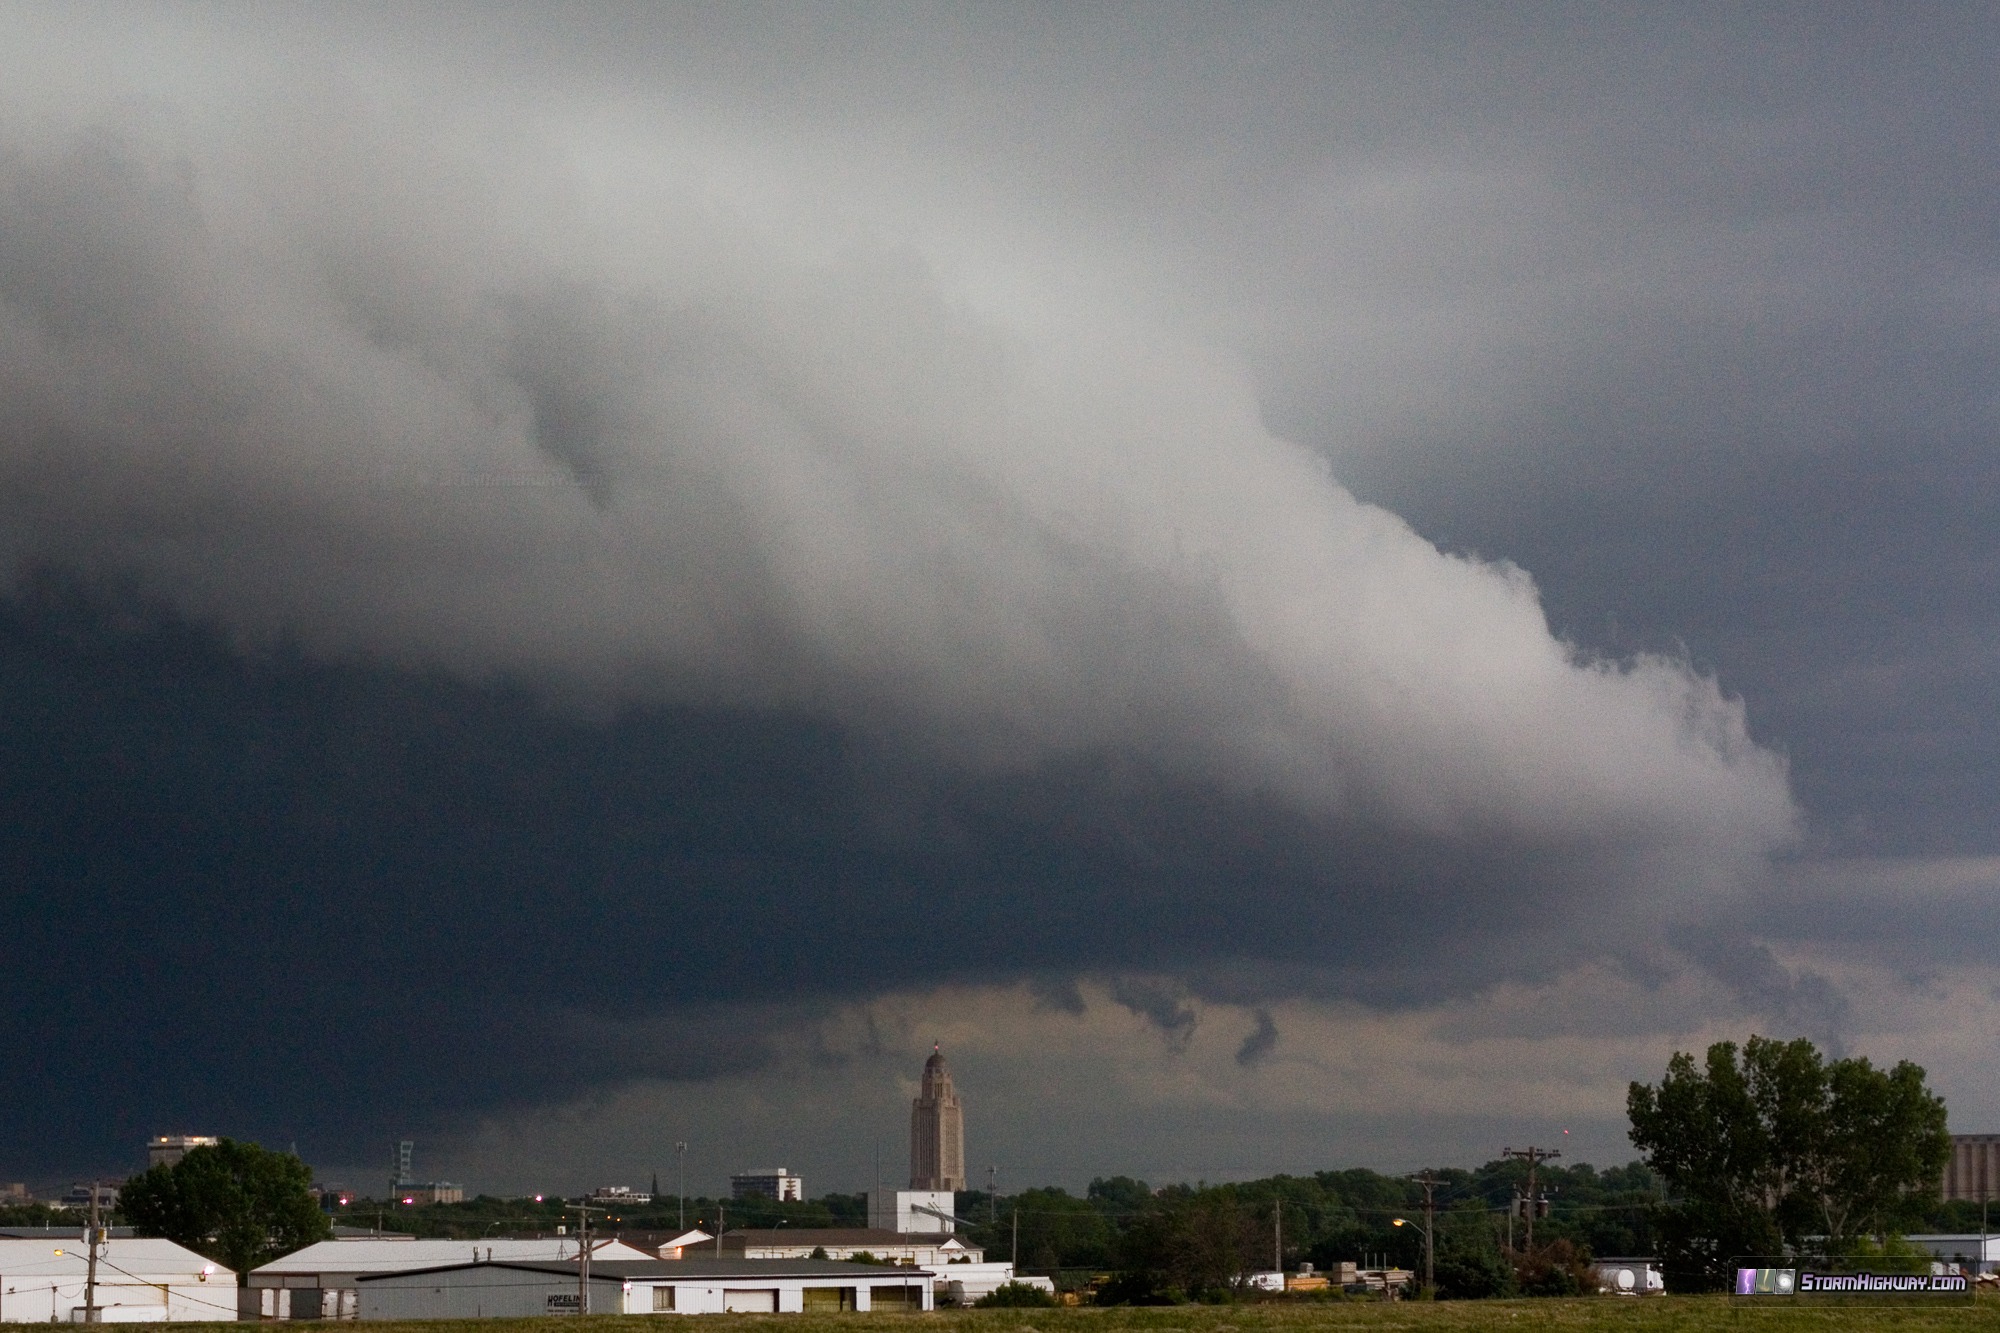 Severe storm moving into Lincoln, Nebraska - June 3, 2014